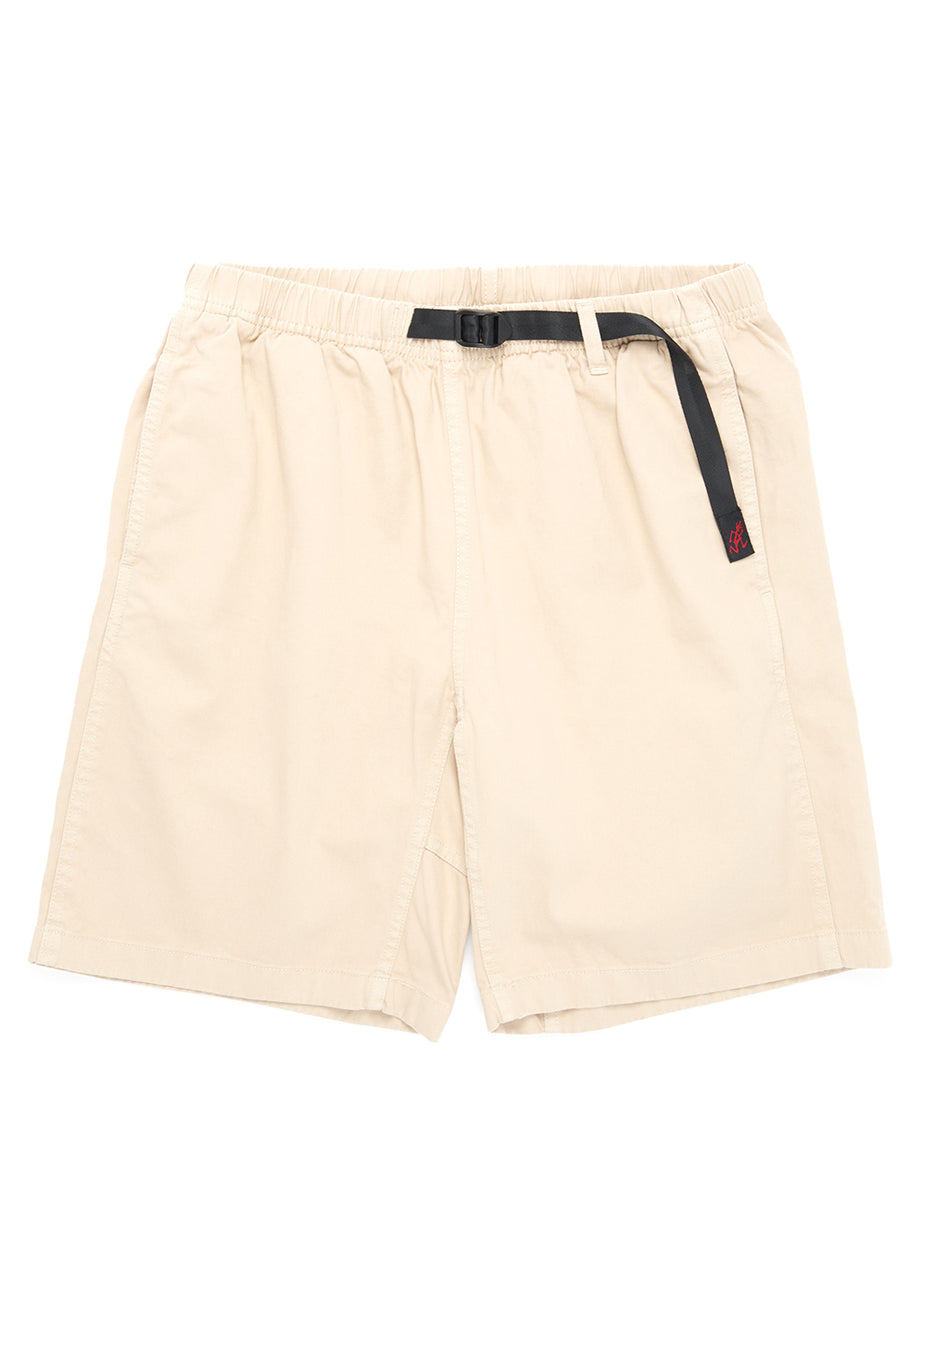 Gramicci Men's G Shorts - US Chino